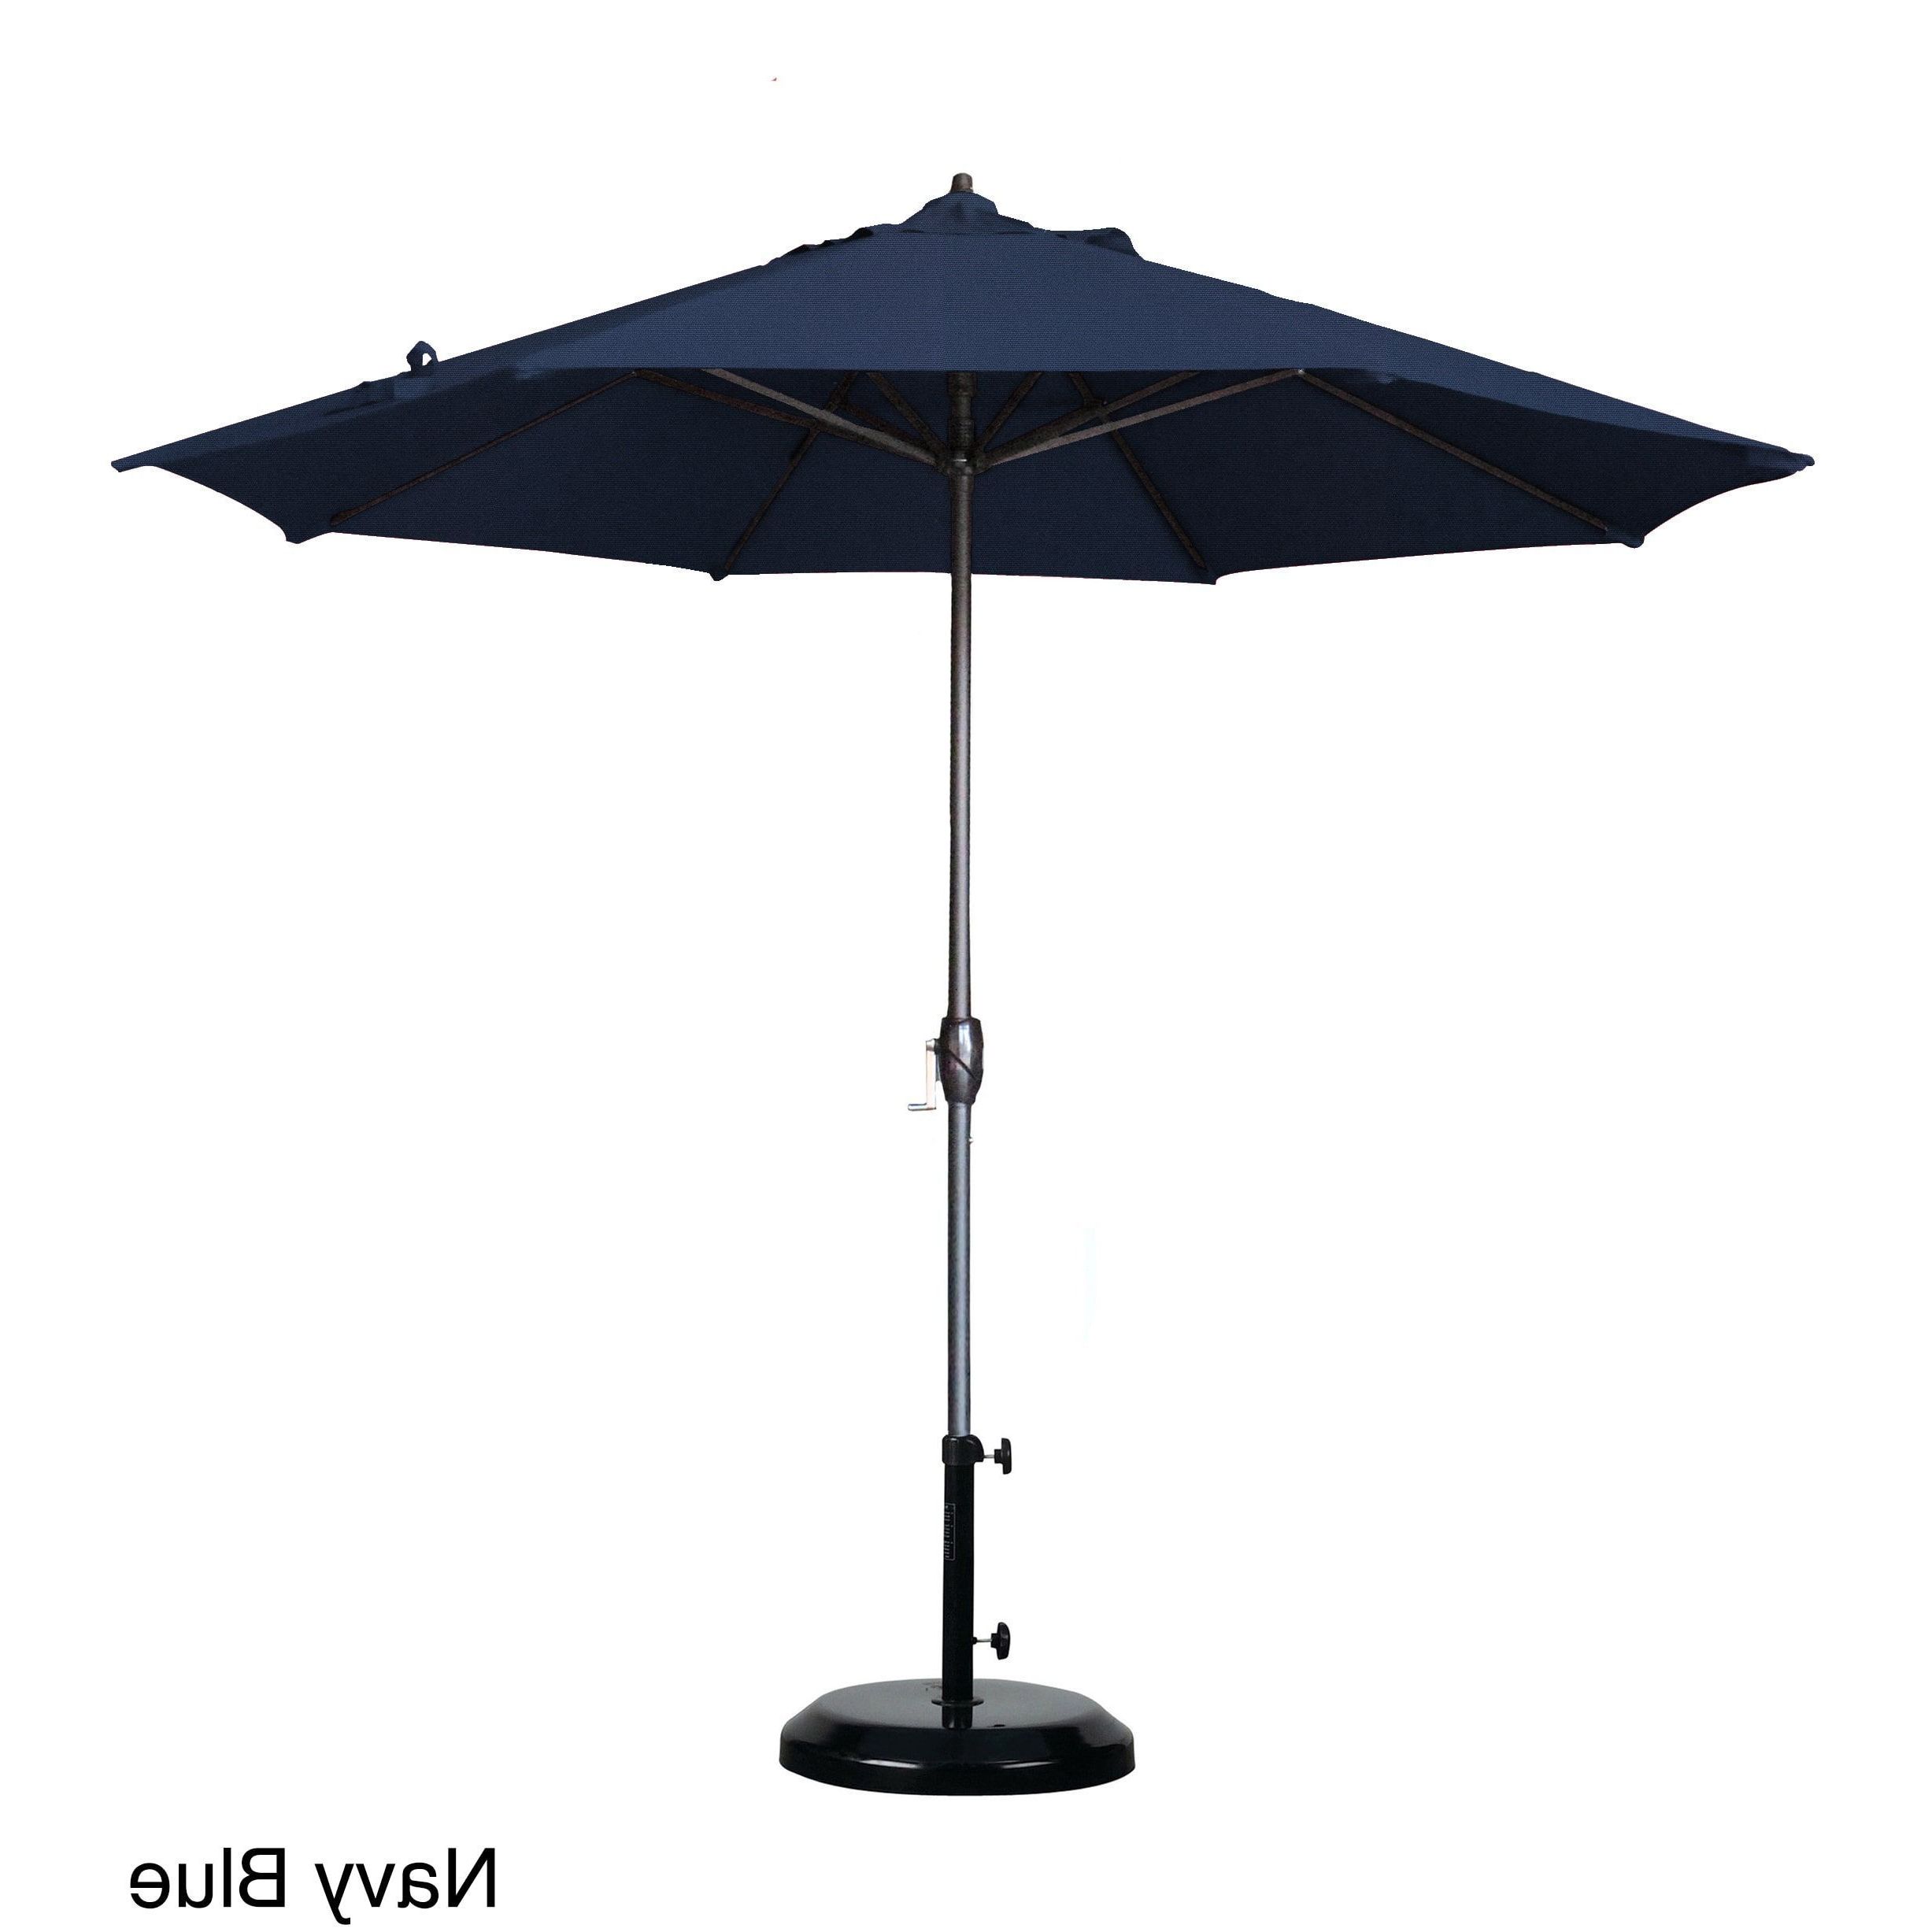 Wacker Market Umbrellas With Regard To Well Liked Oliver & James Giusti 9 Foot Crank Open Auto Tilt Round Umbrella (View 5 of 20)